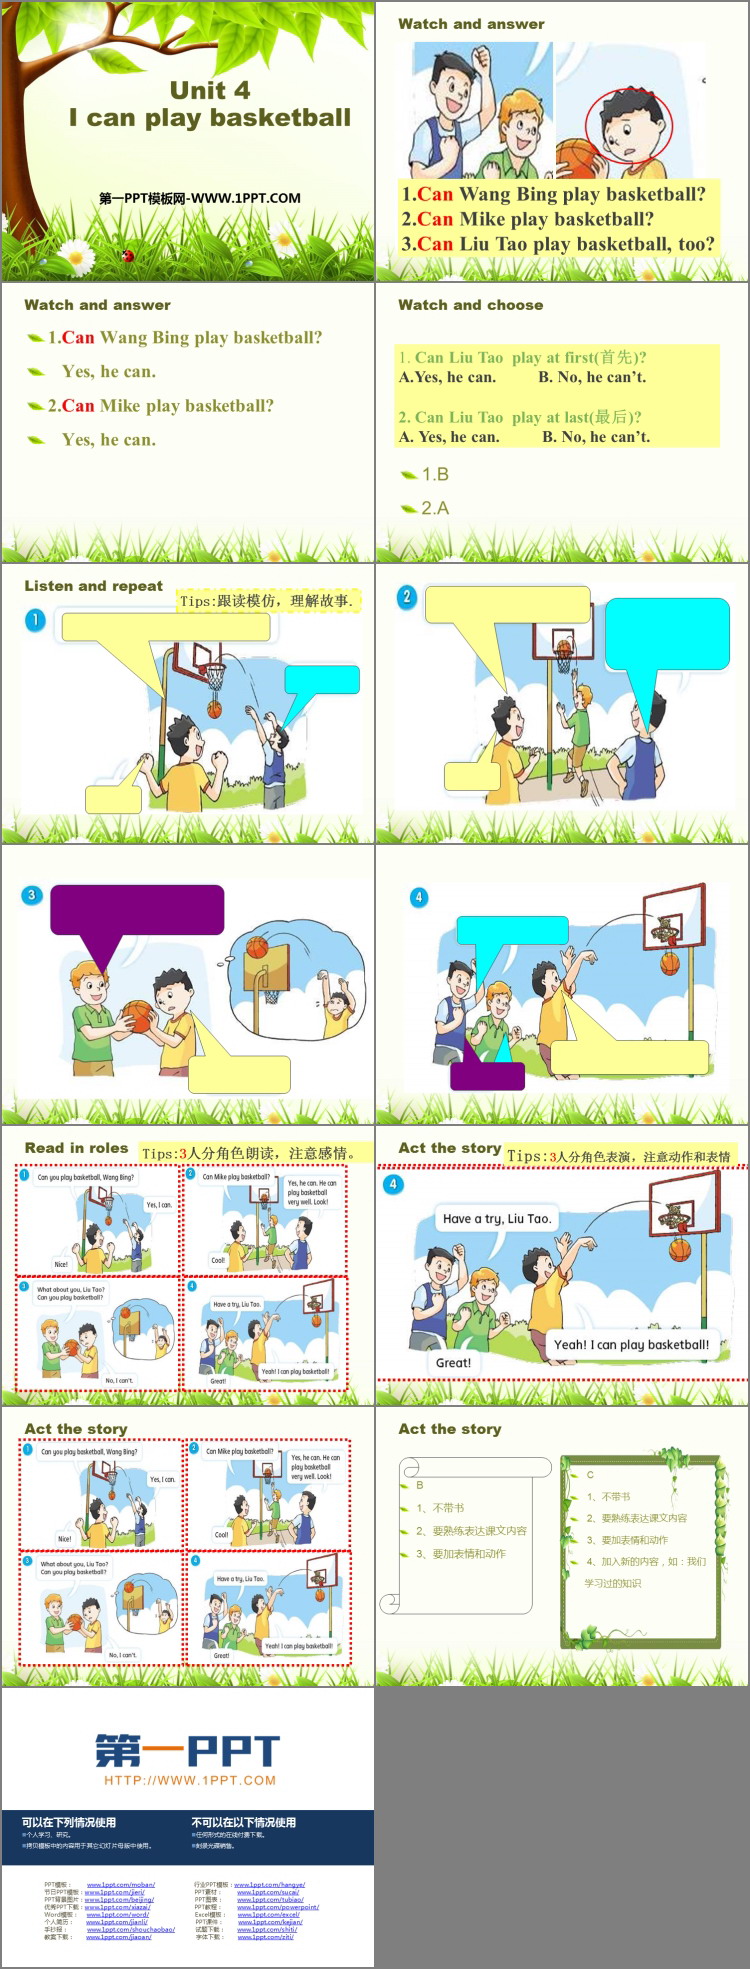 《I can play basketball》PPT教学课件-预览图02